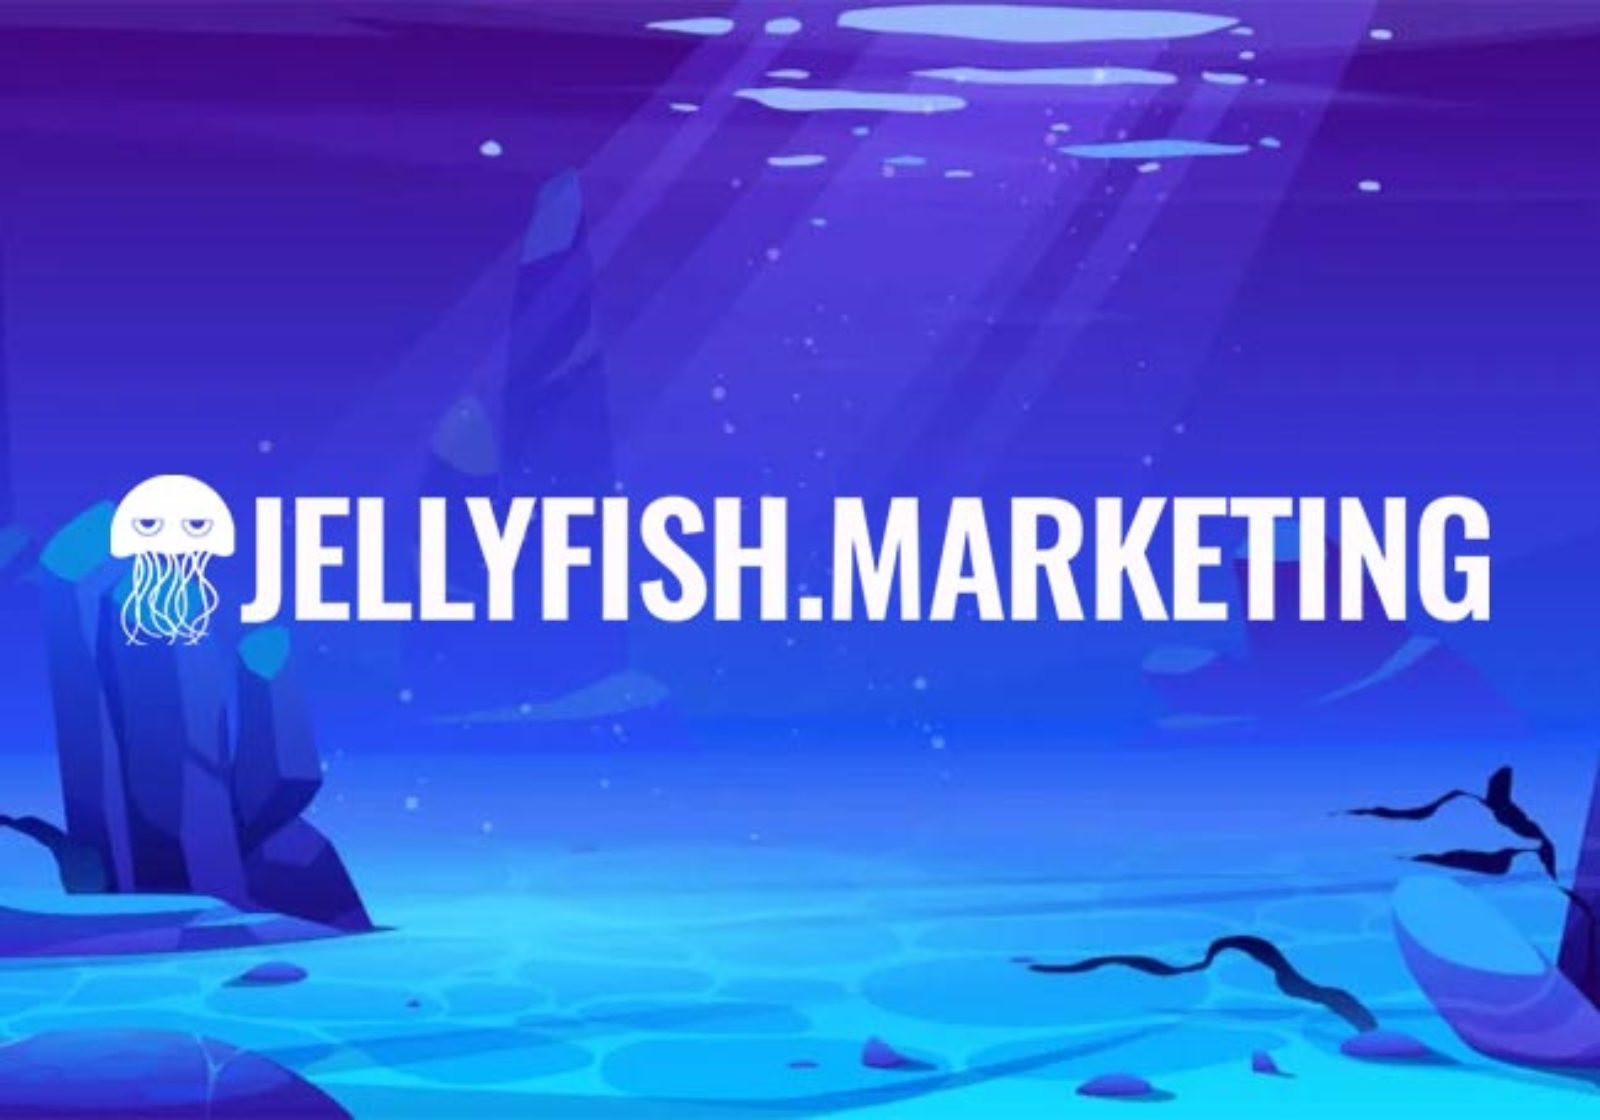 Jellyfish.marketing